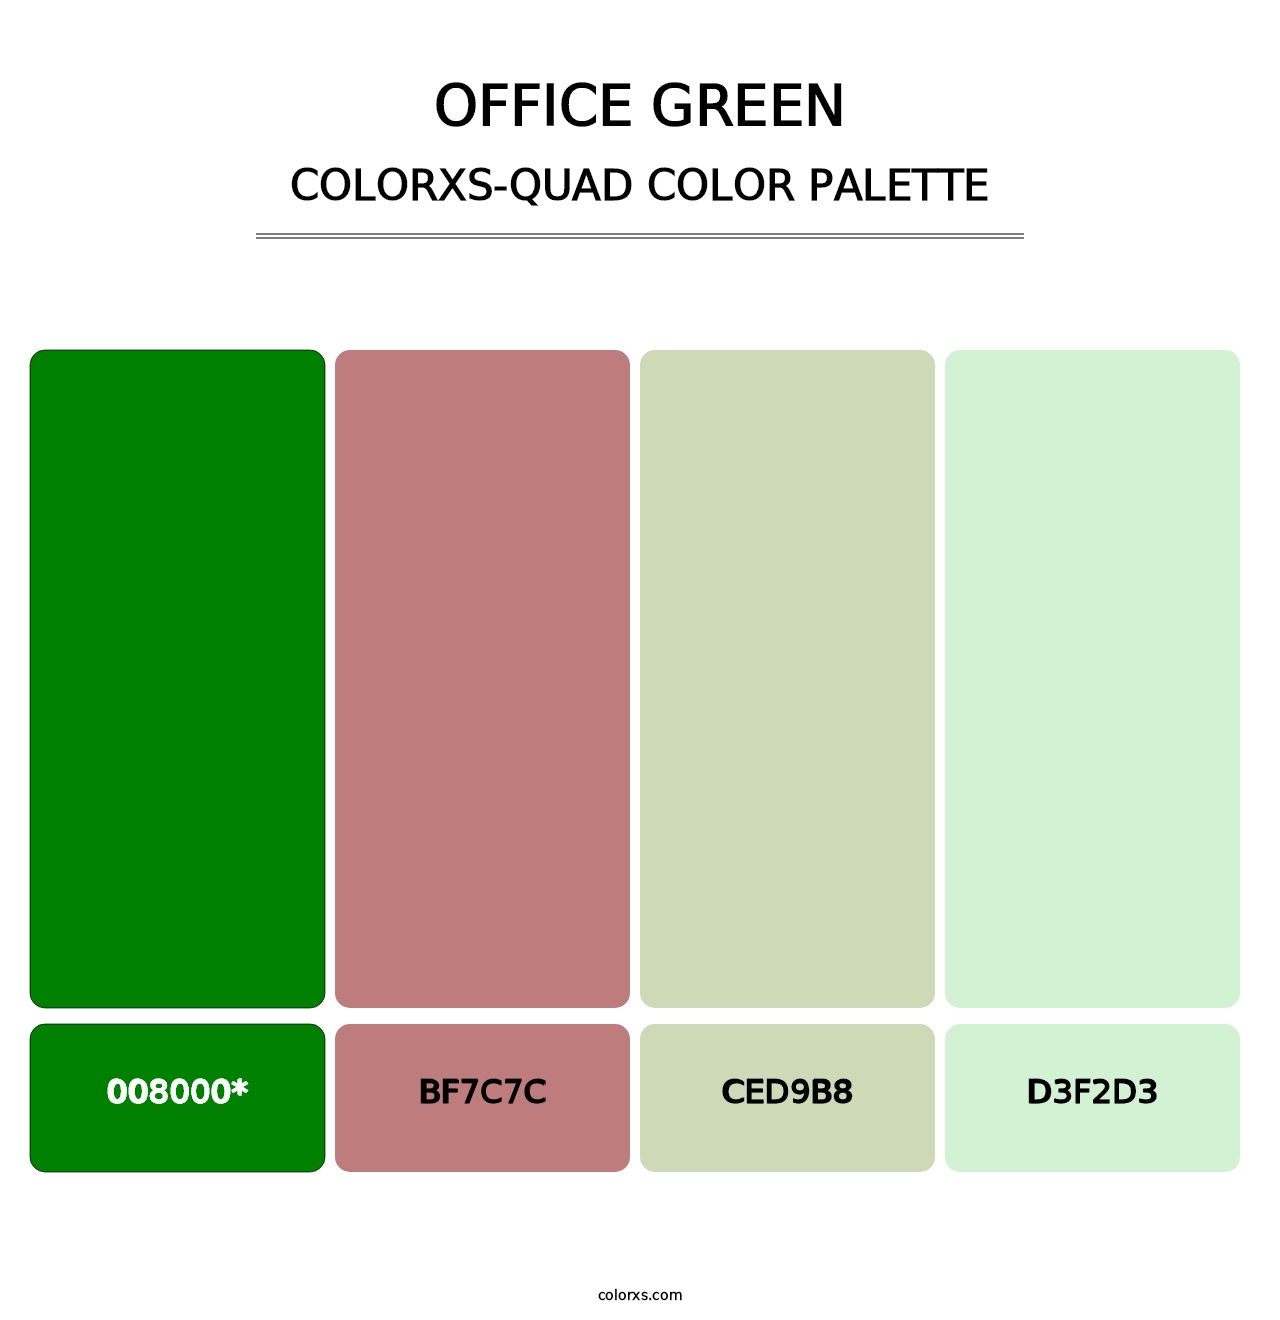 Office Green - Colorxs Quad Palette